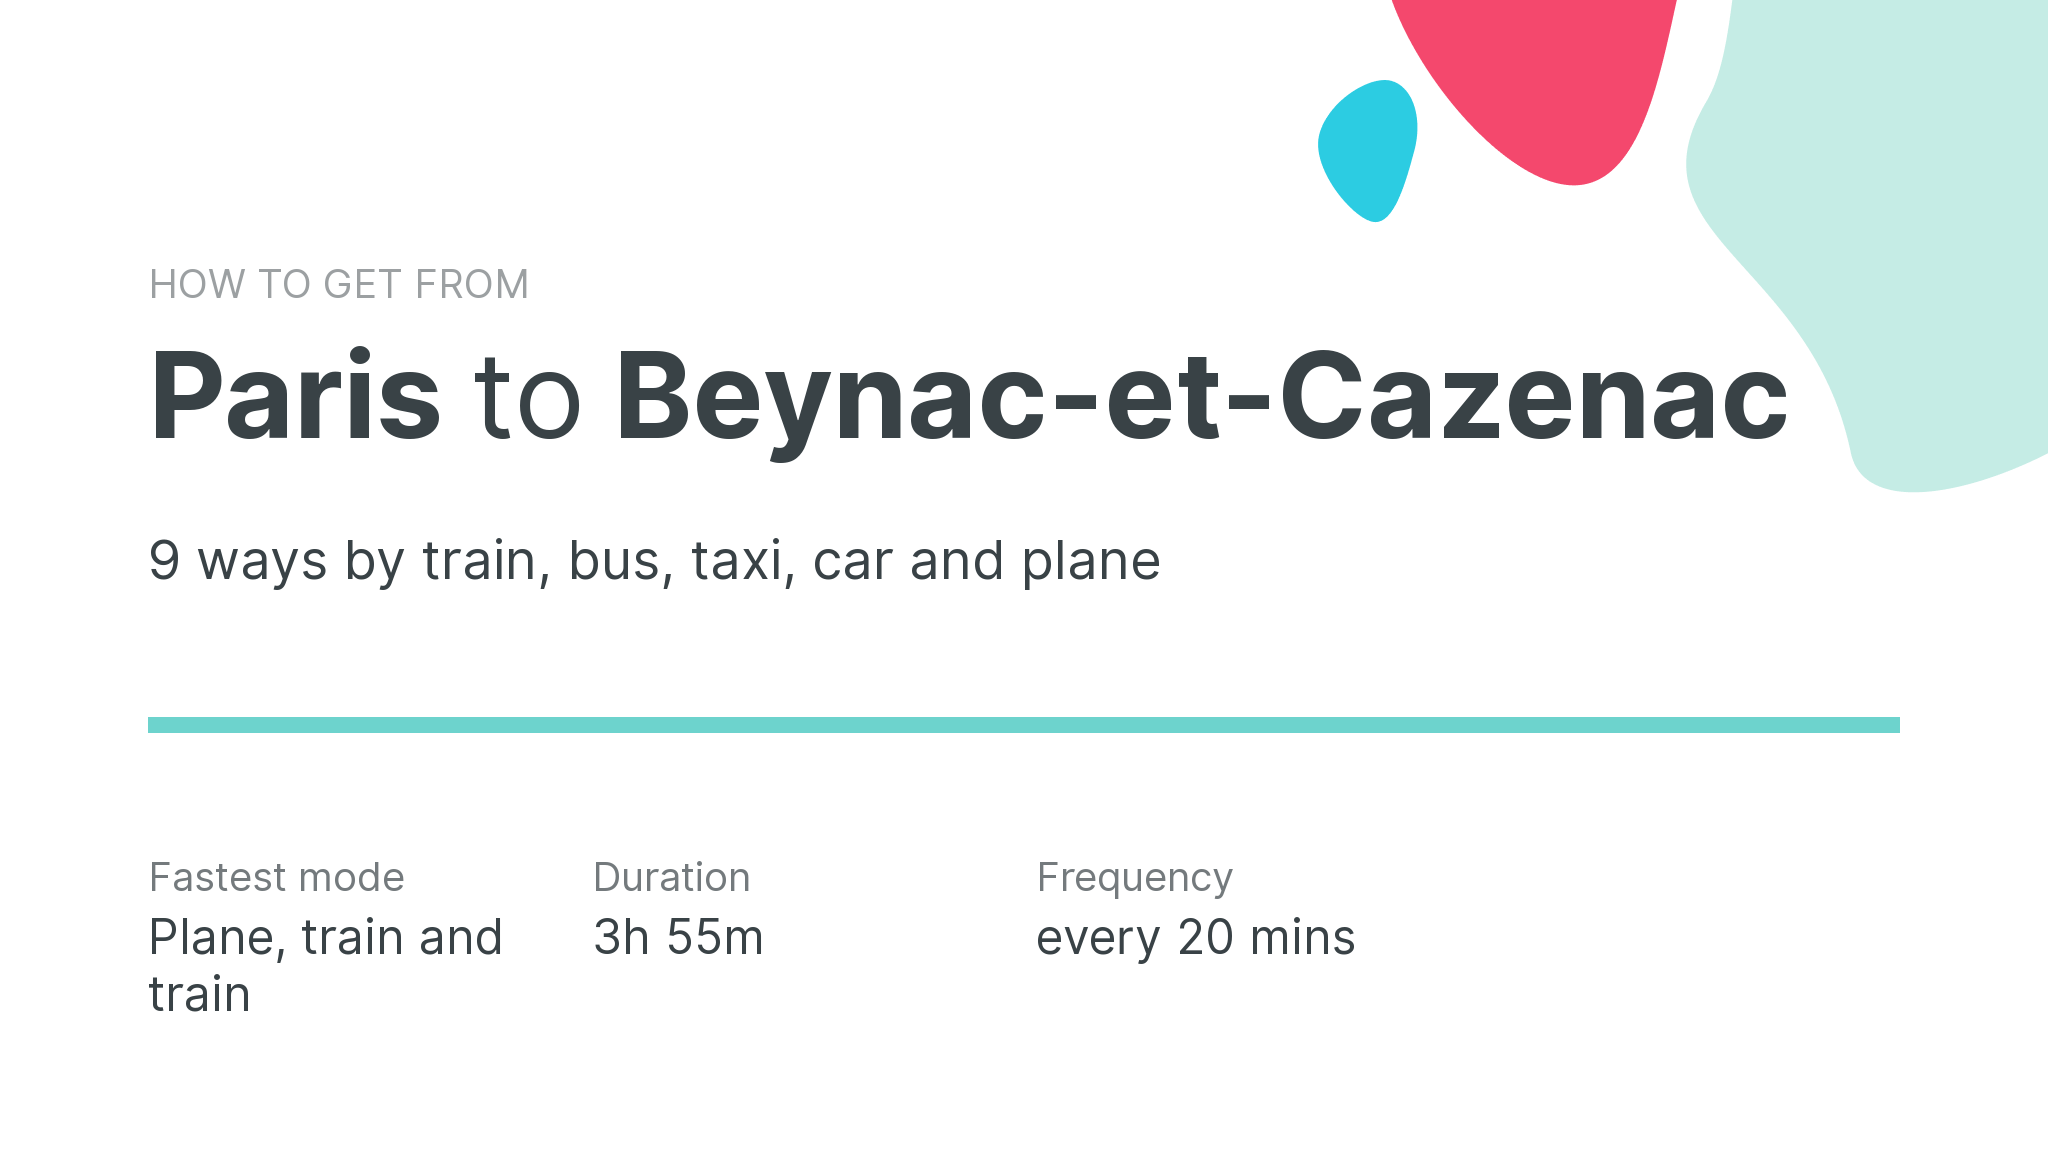 How do I get from Paris to Beynac-et-Cazenac